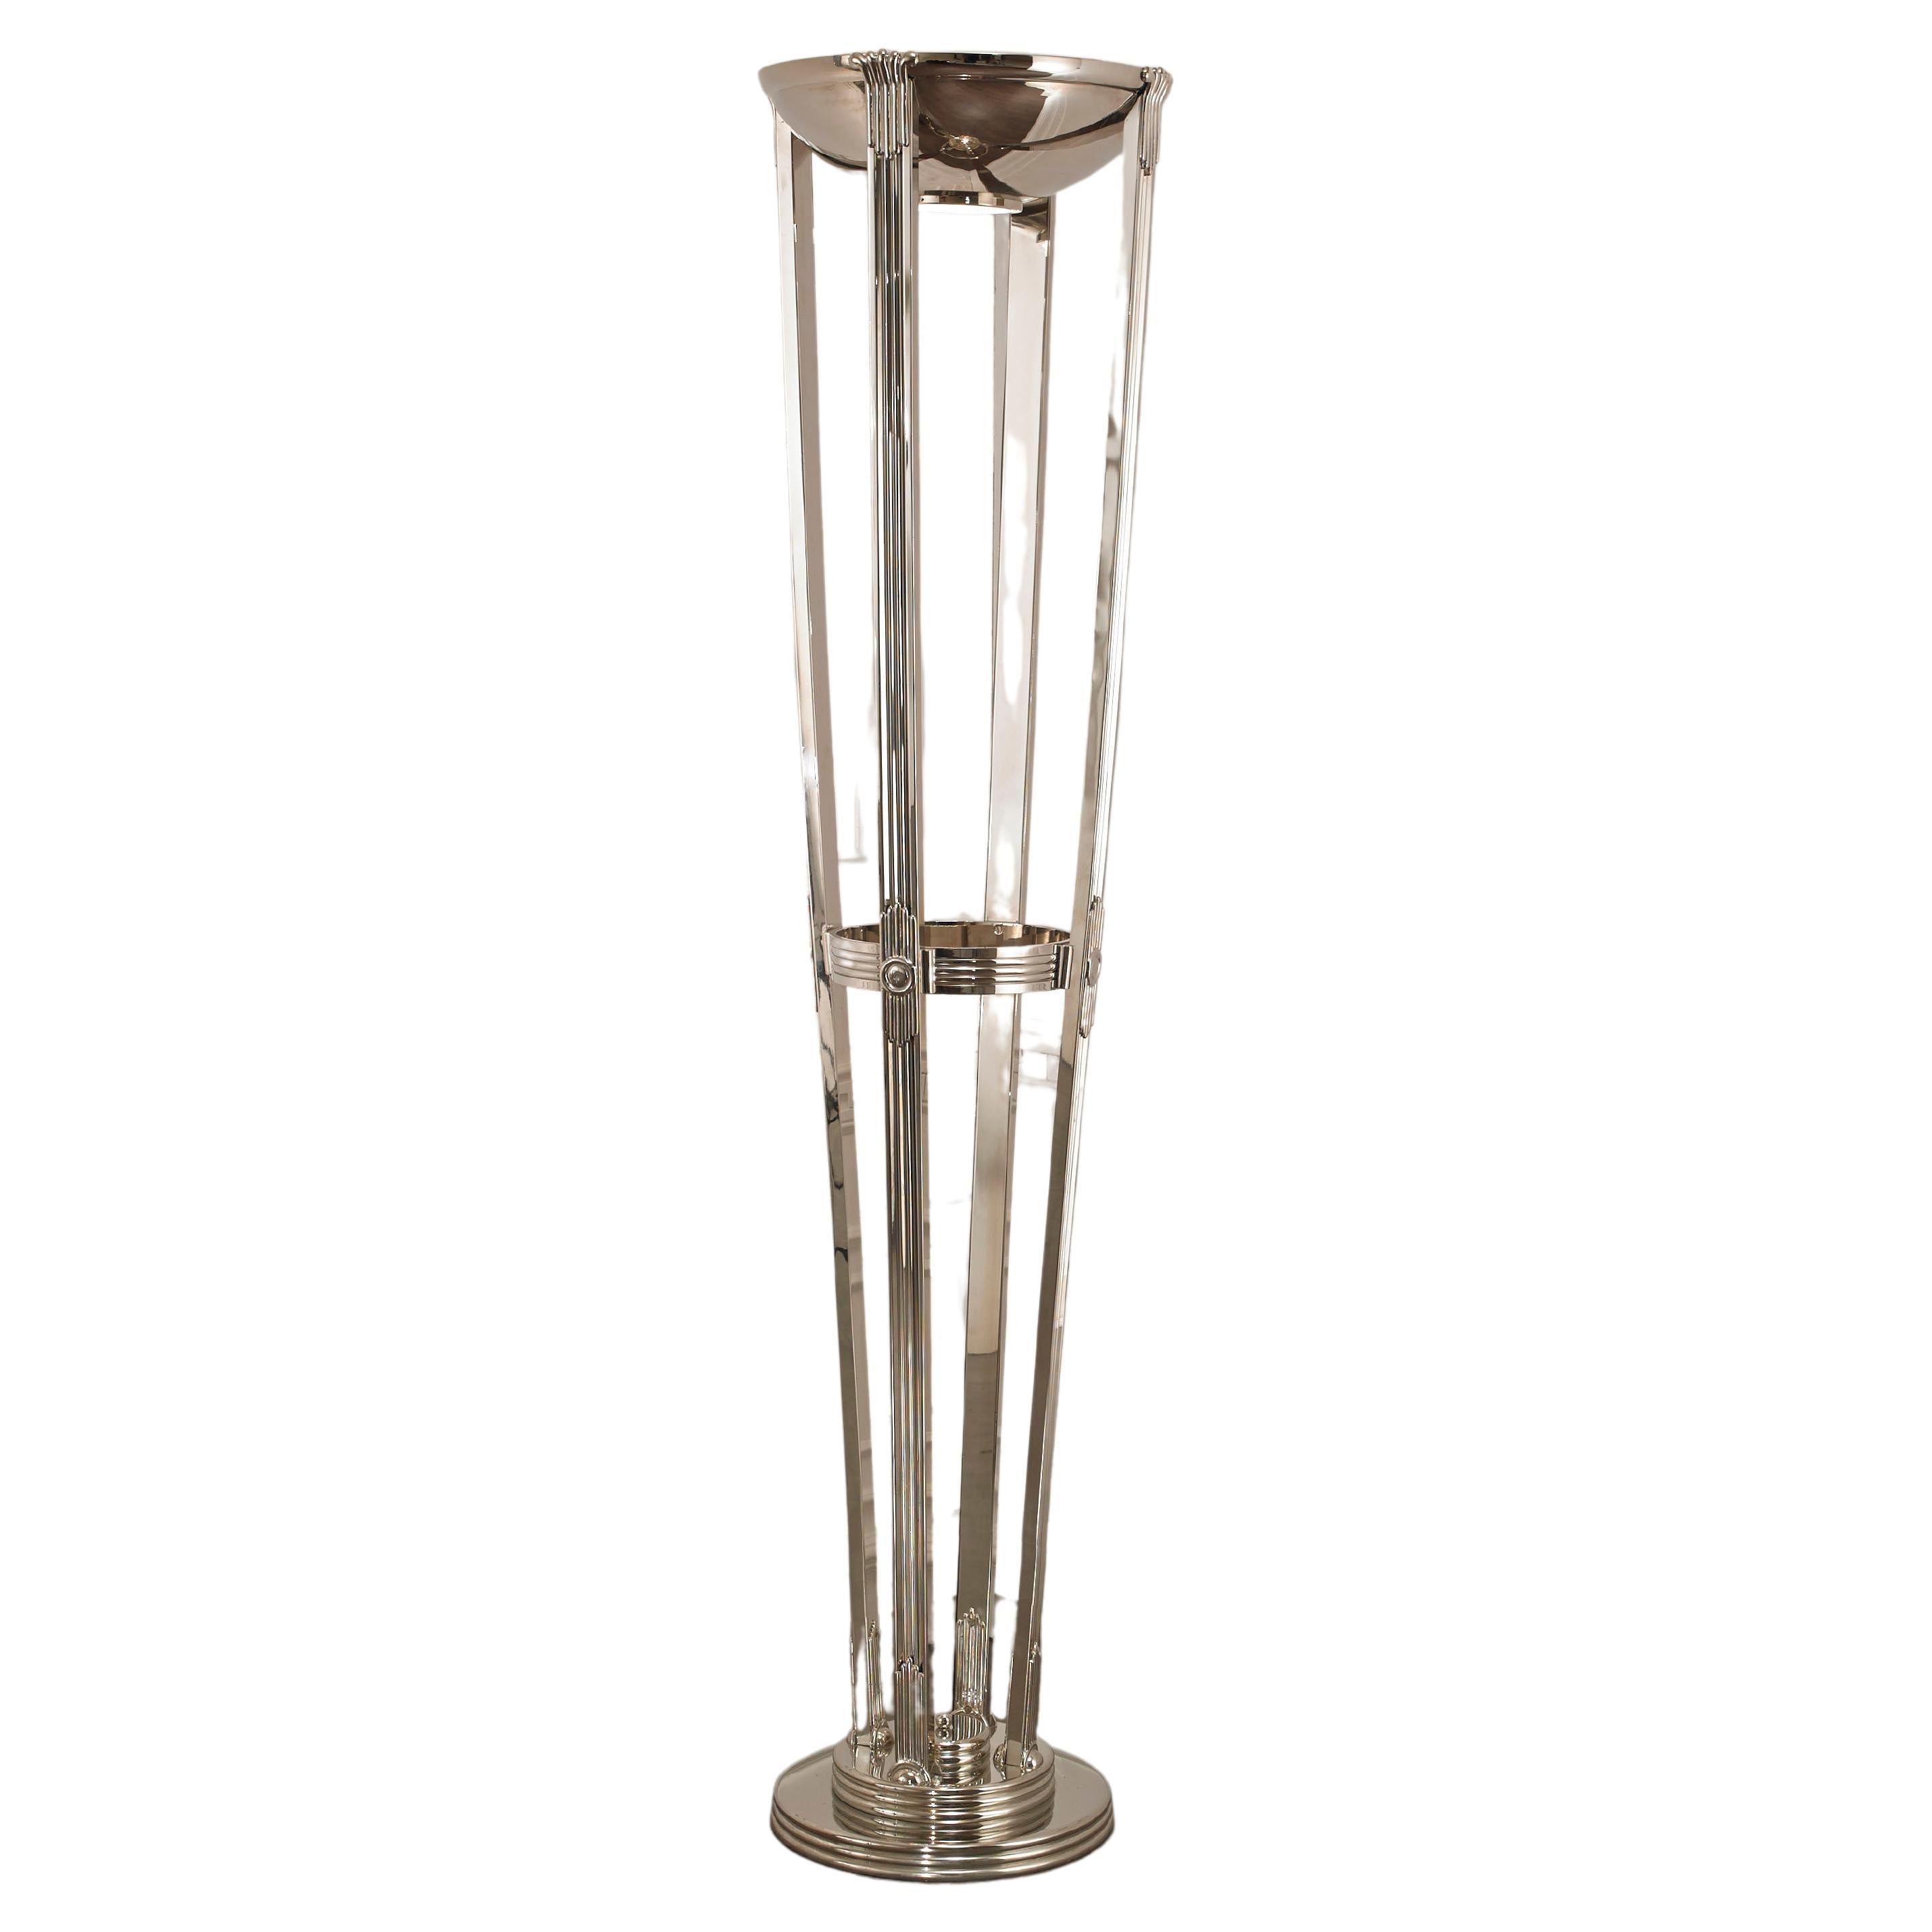 Art Deco Modernist Floor Lamp with Nickel Finish